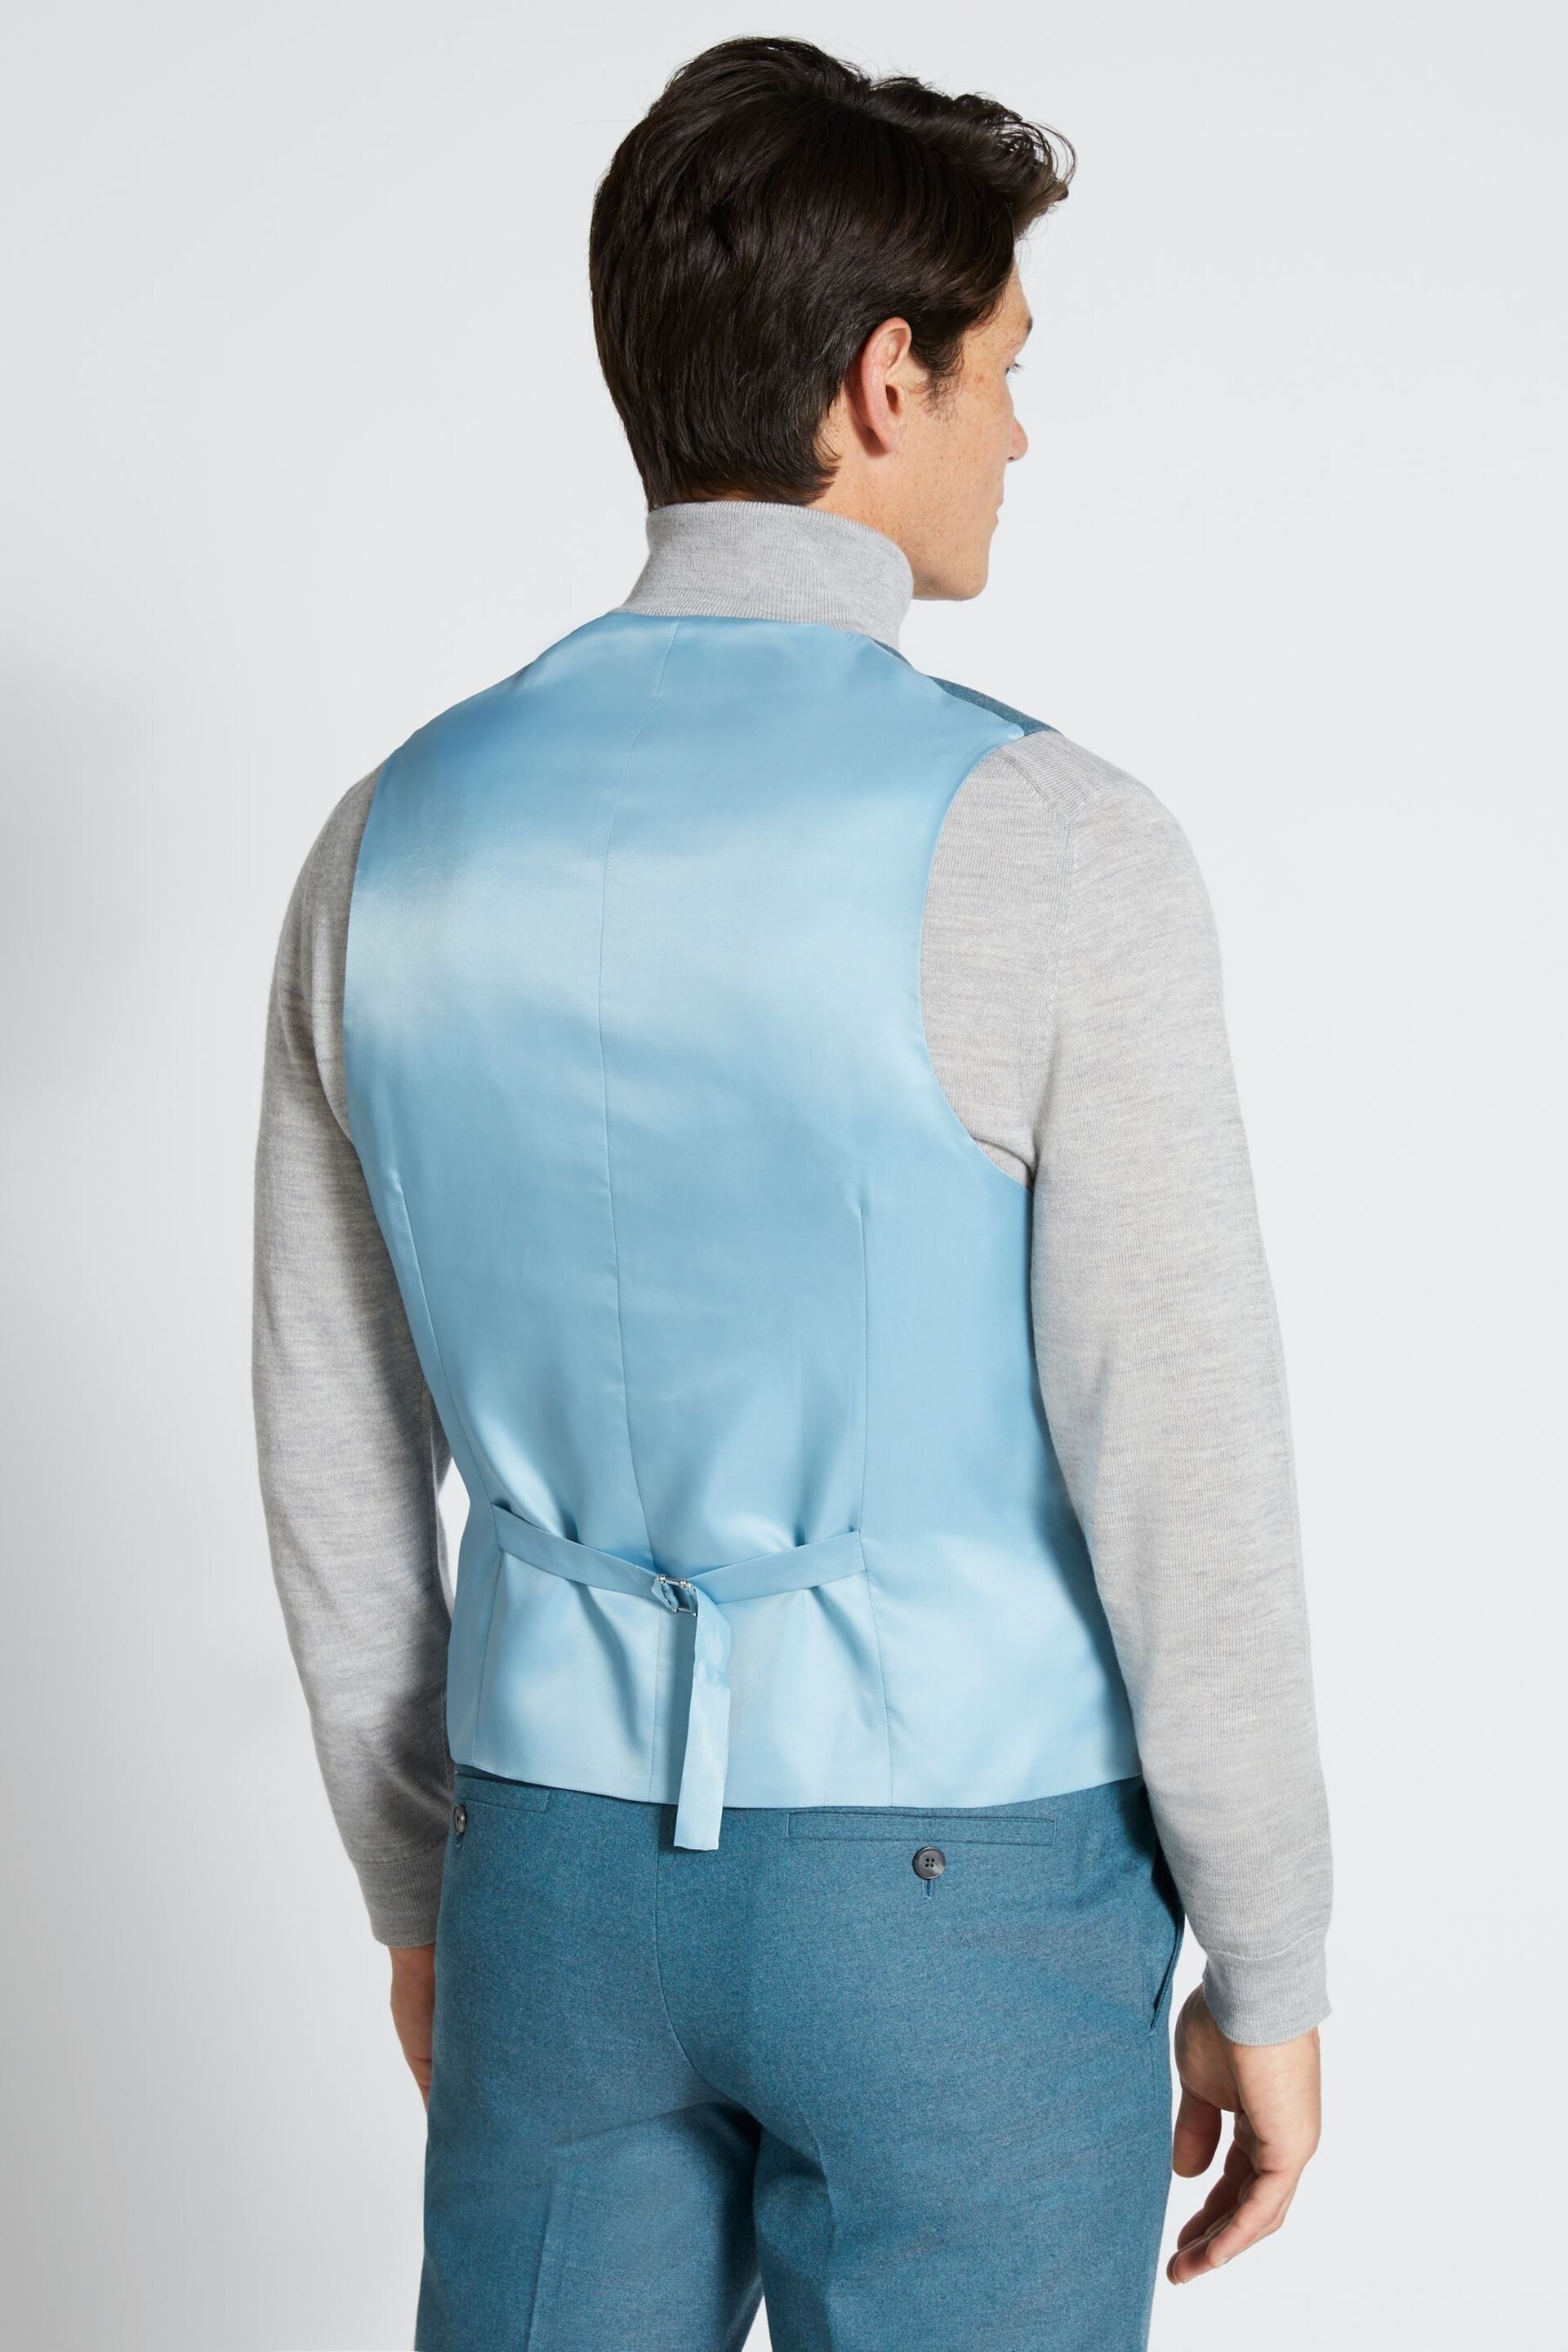 MOSS Blue Flannel Suit Waistcoat - Image 2 of 3